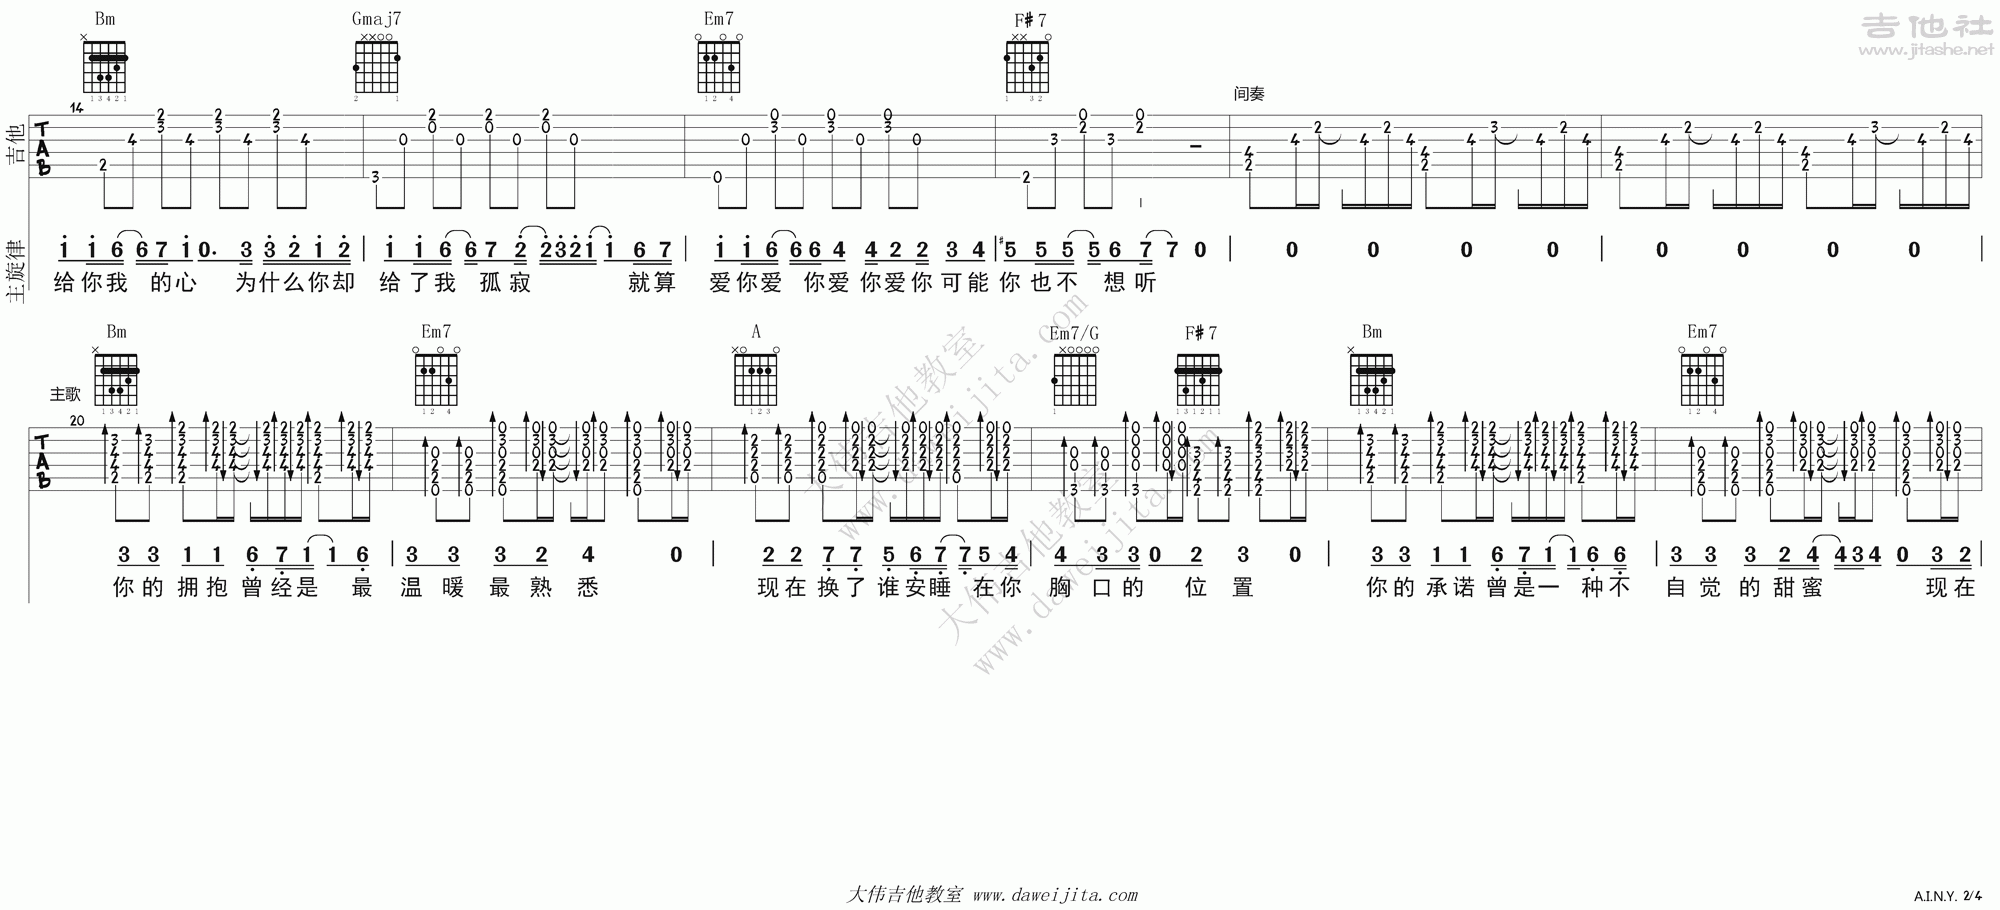 ainy (爱你)吉他谱(图片谱,弹唱,大伟吉他,教程)